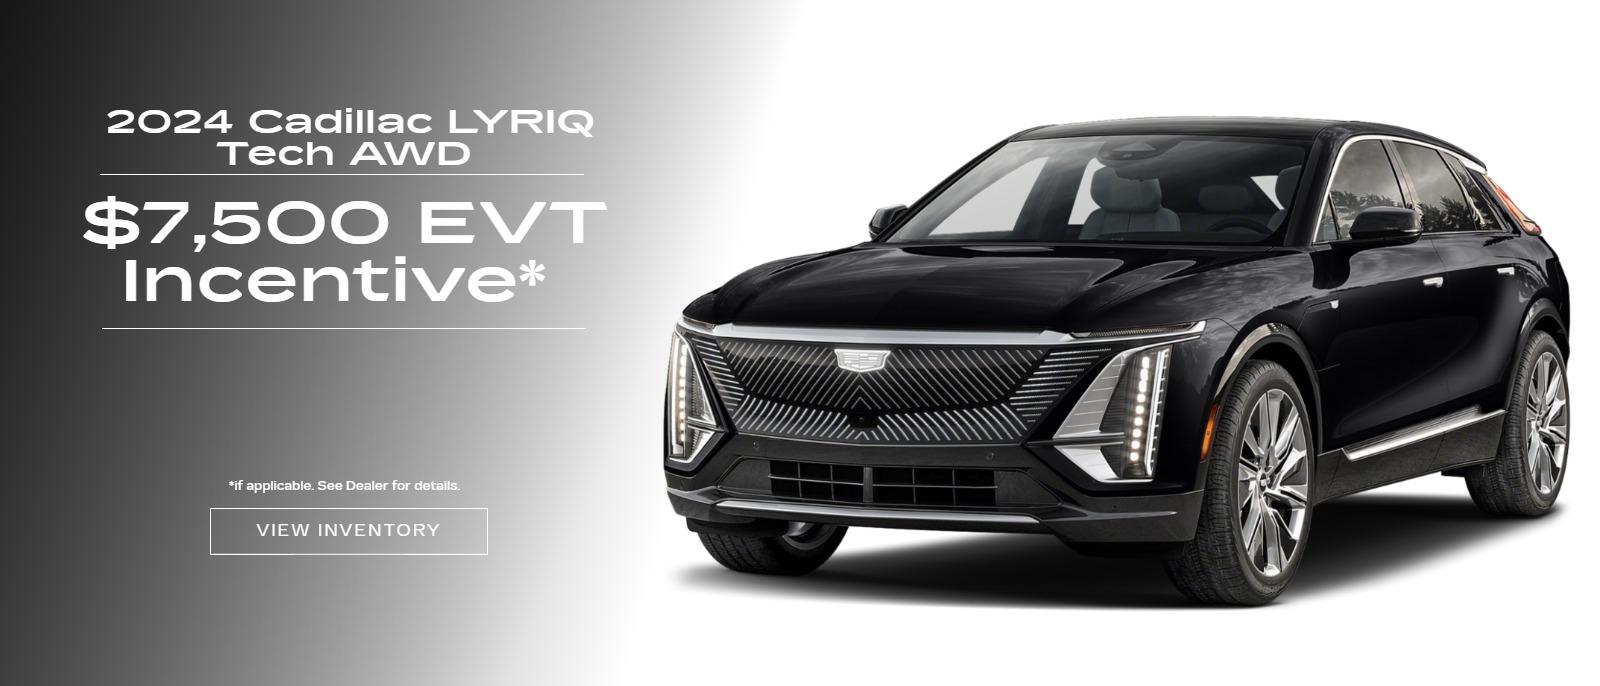 2024 Cadillac Lyric $7500 EVT Incentive